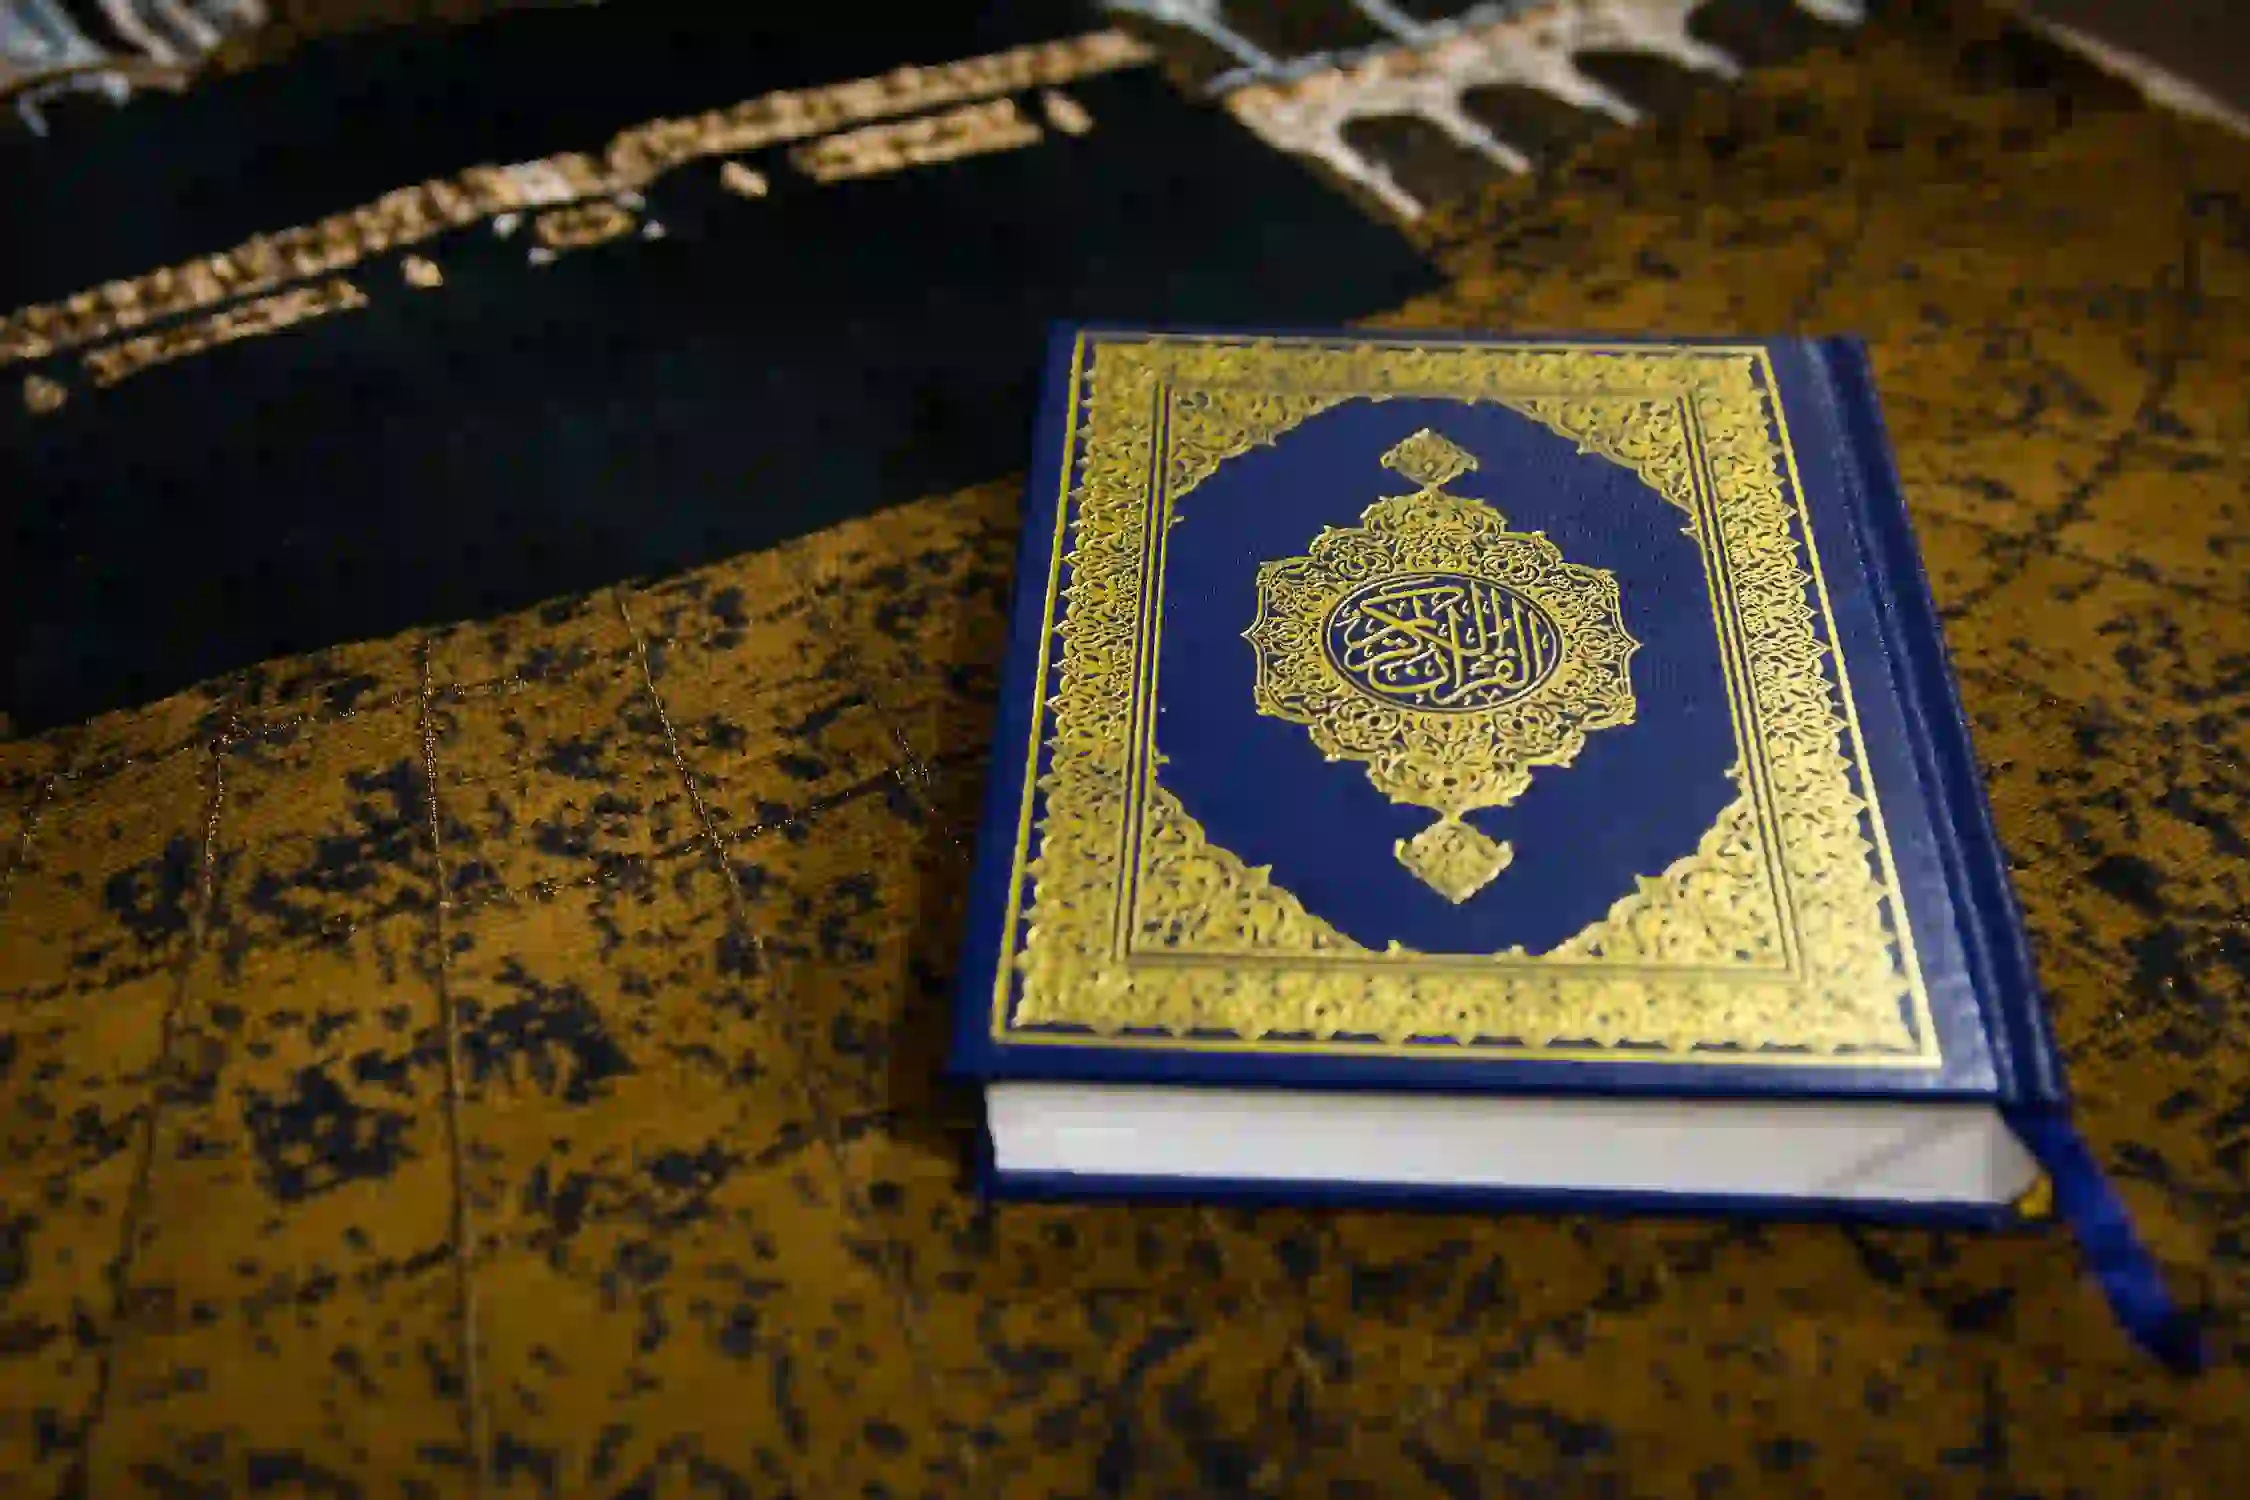 Denmark Mencari Cara untuk Menghentikan Aksi Pembakaran Al-Qur'an Seraya Tetap Menegakkan Kebebasan Berekspresi